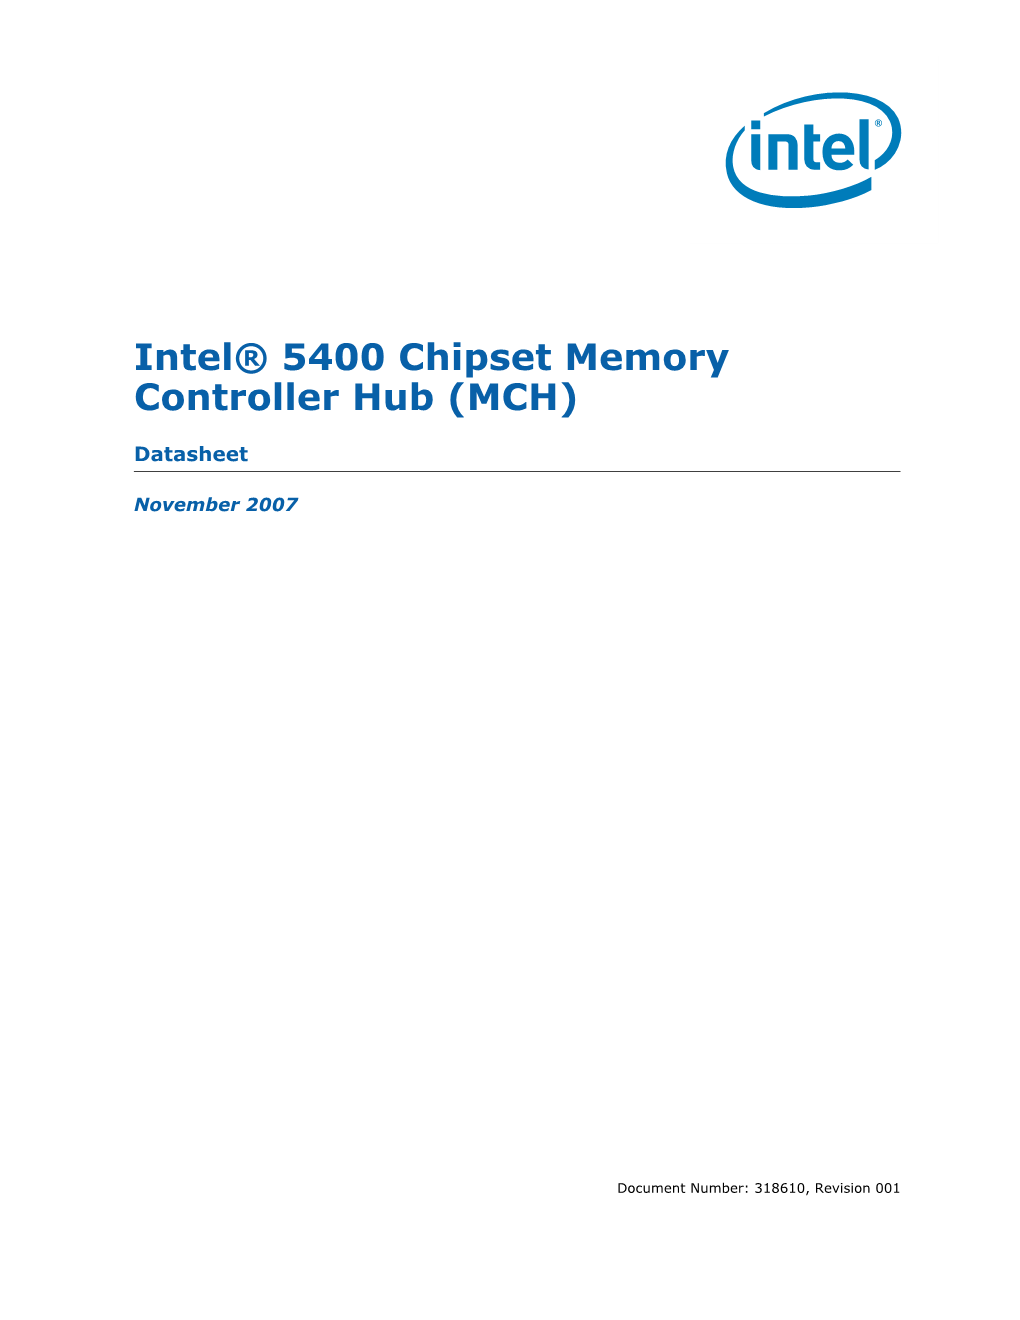 Intel® 5400 Chipset Memory Controller Hub (MCH)